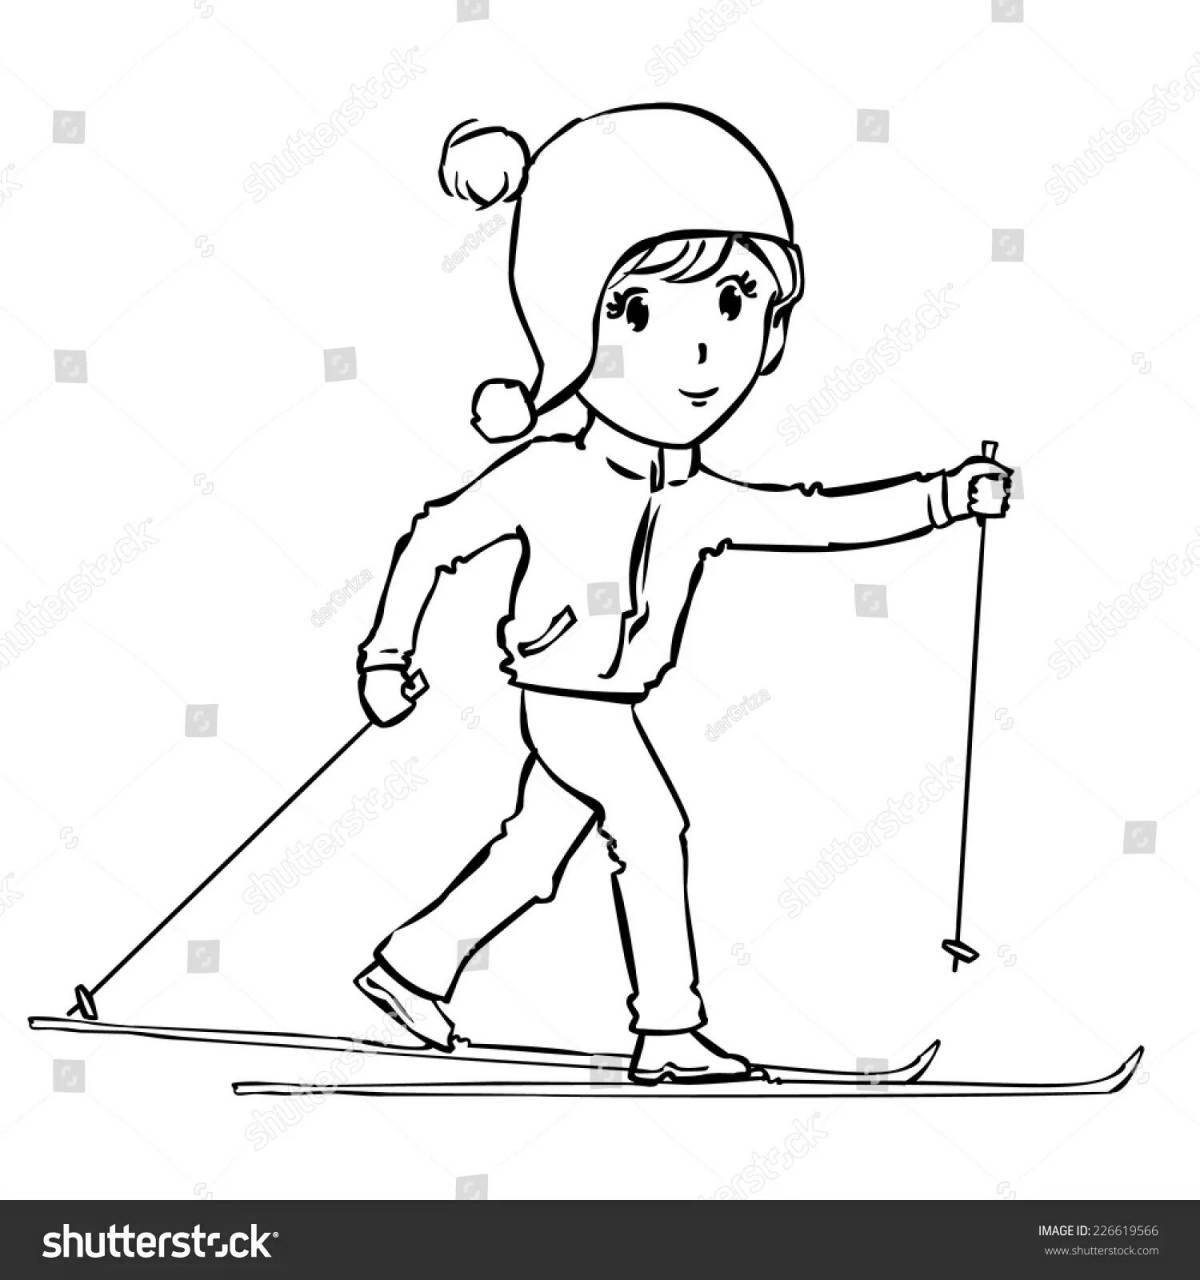 Joyful man on skis